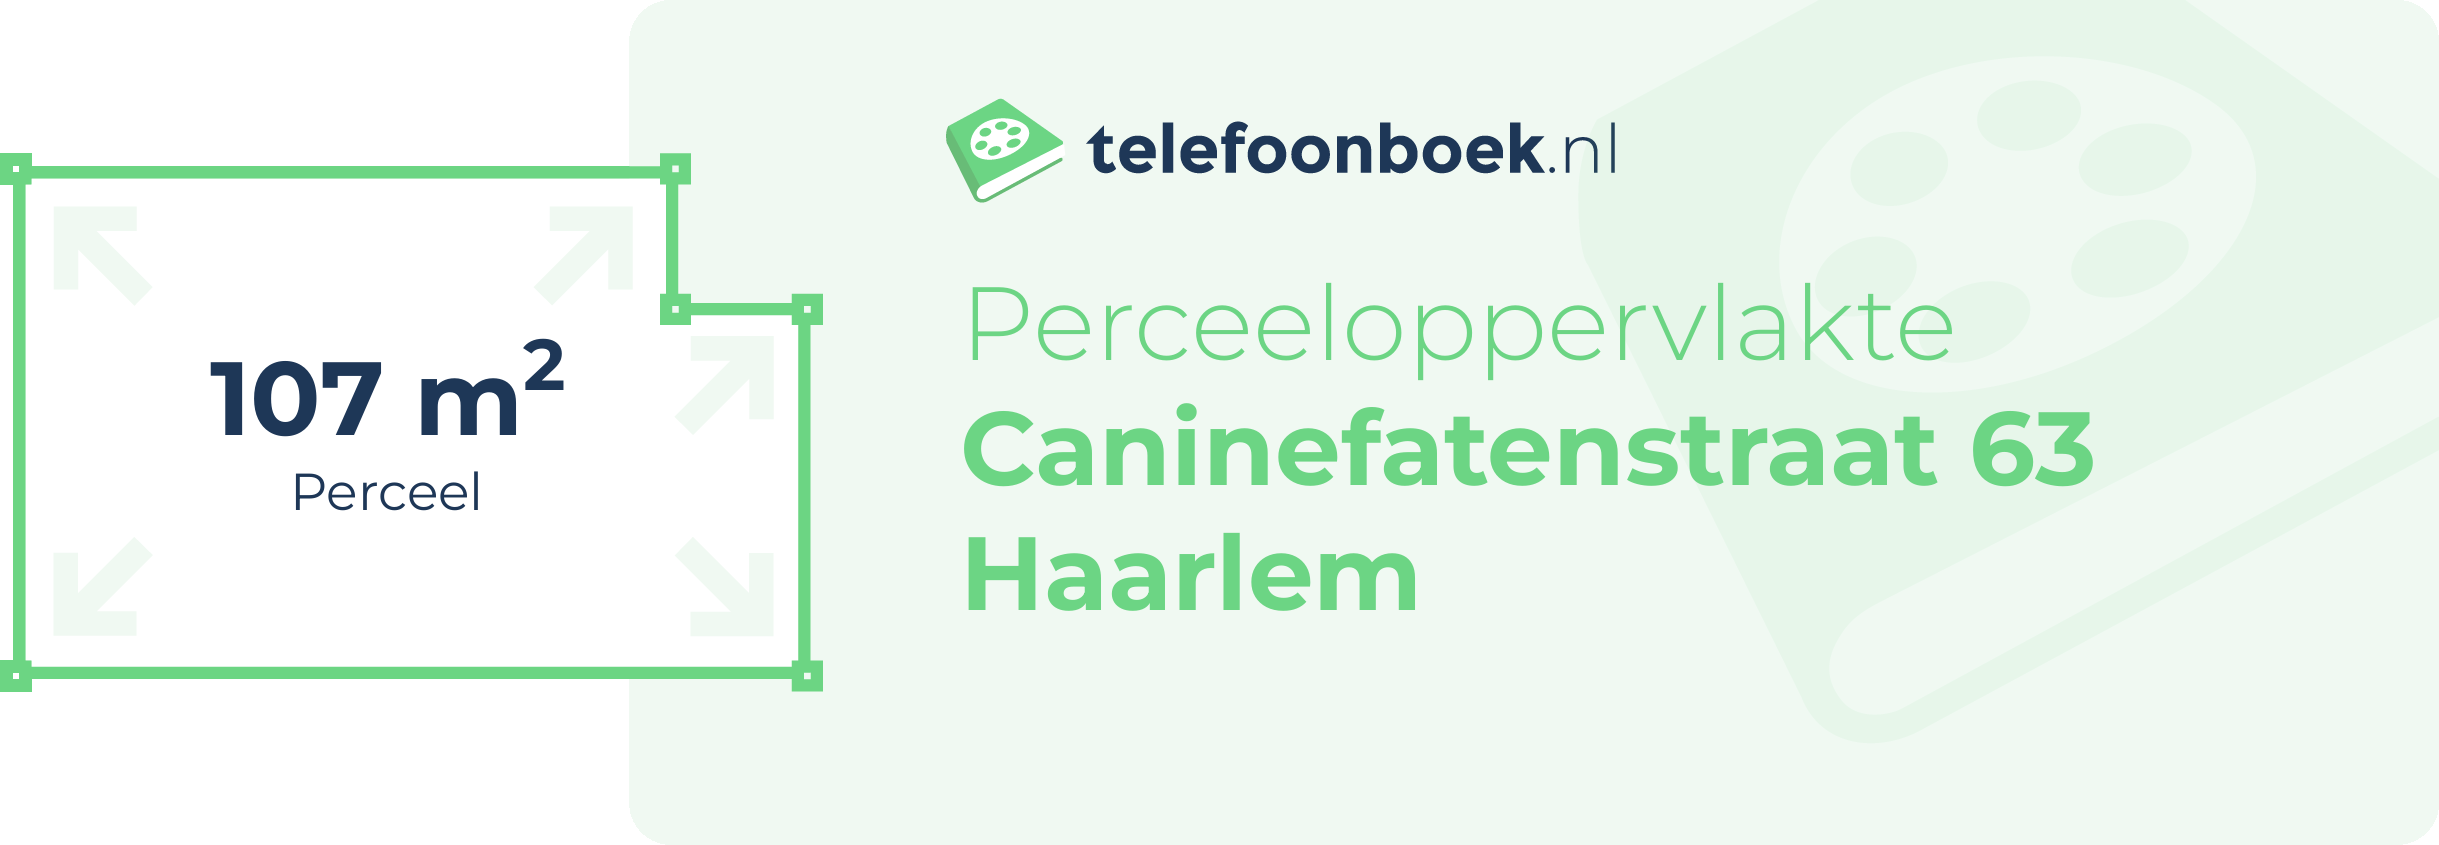 Perceeloppervlakte Caninefatenstraat 63 Haarlem